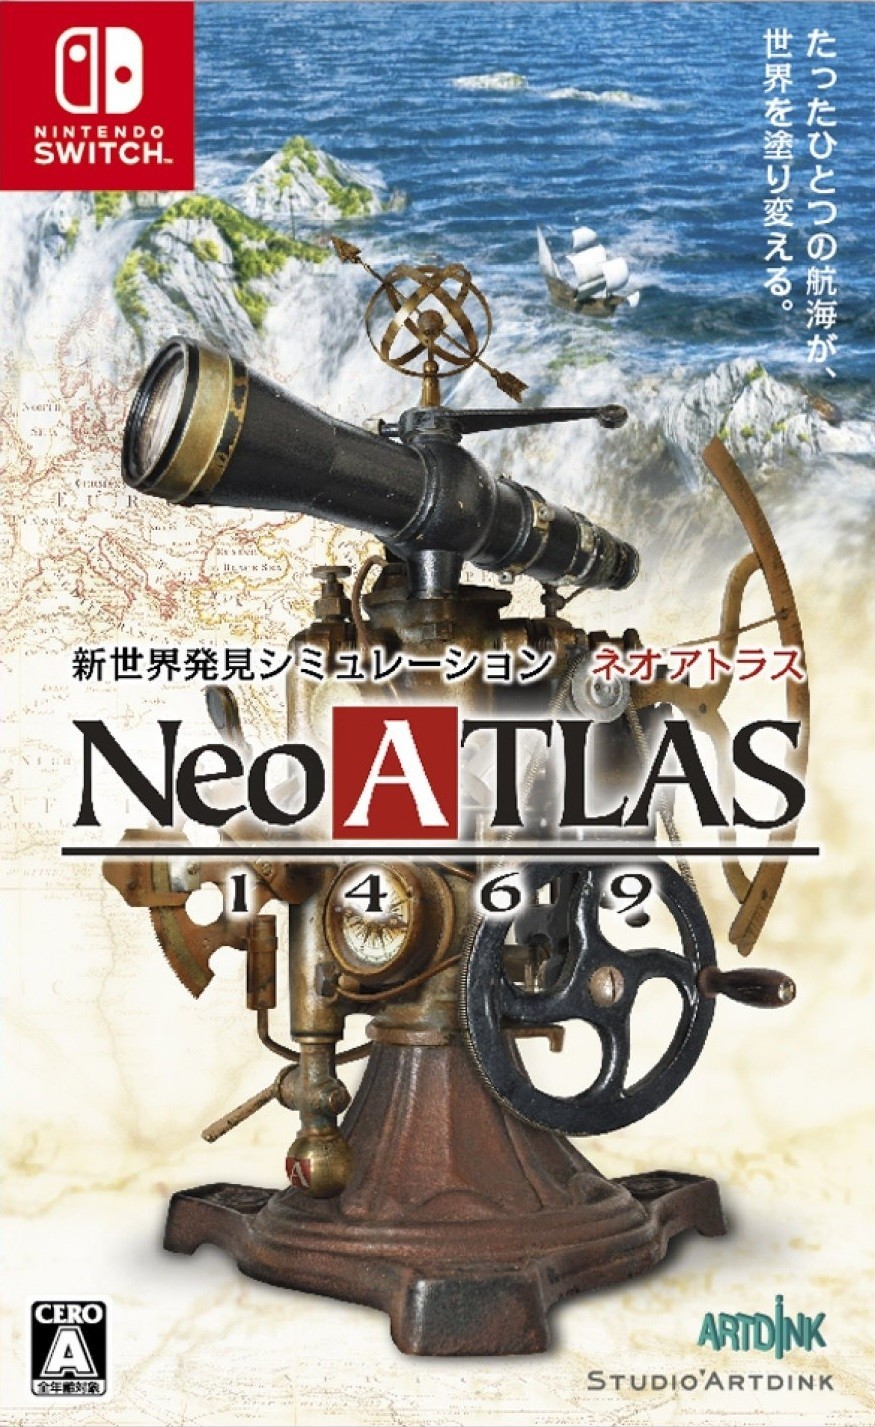 Neo Atlas 1469 (Switch), Artdink